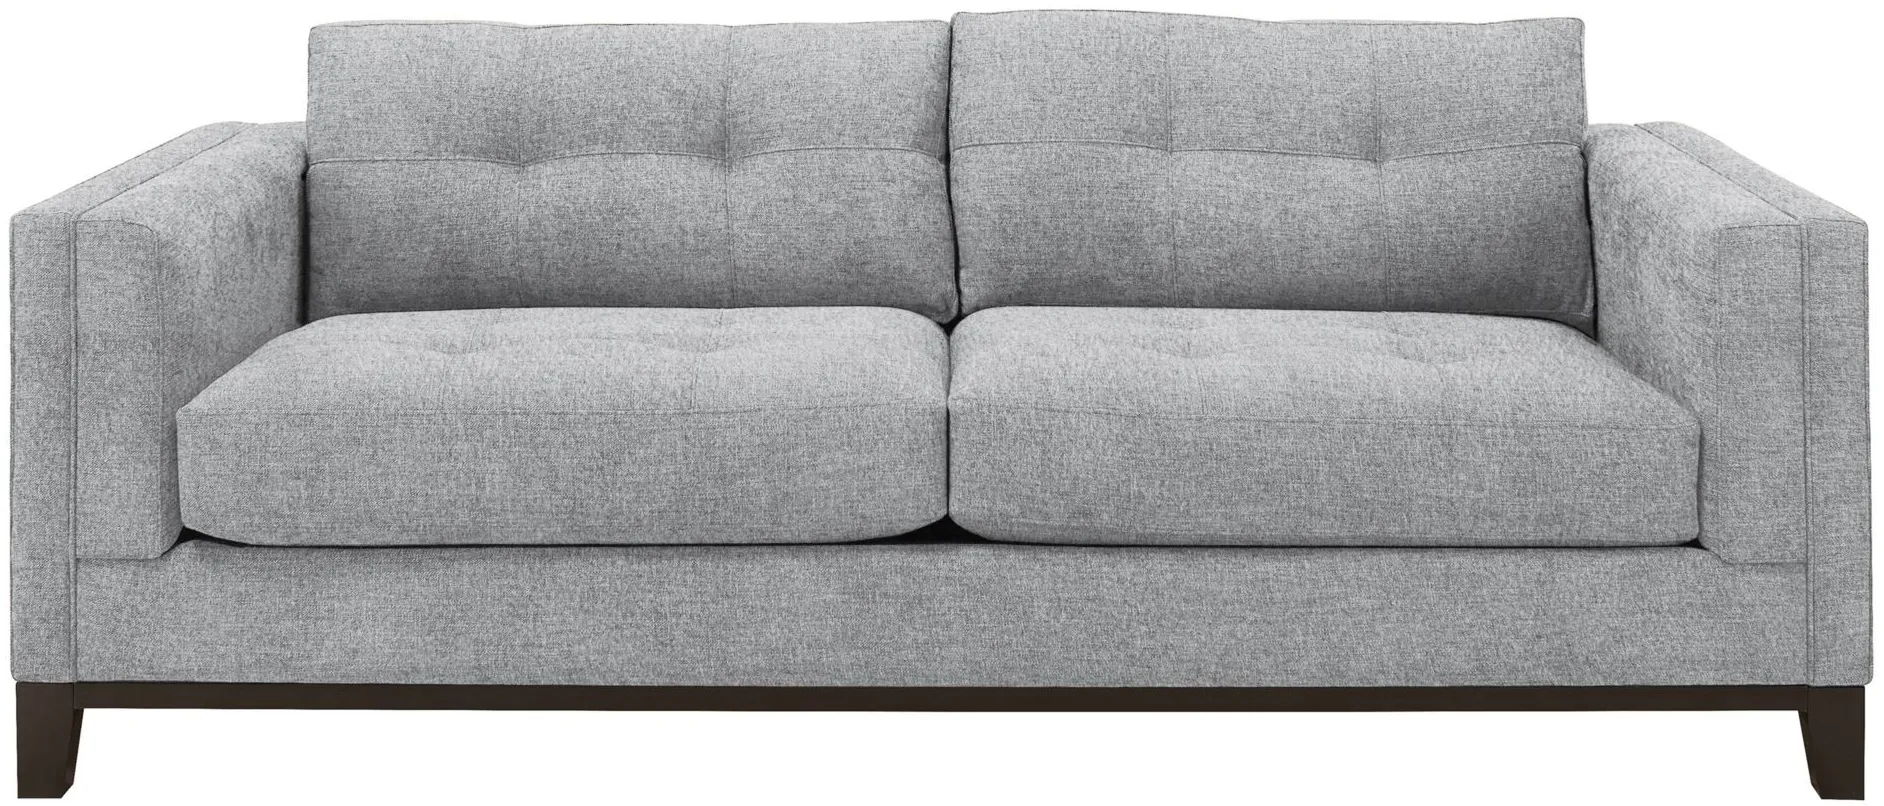 Mirasol Sofa in Suede so Soft Platnium by H.M. Richards